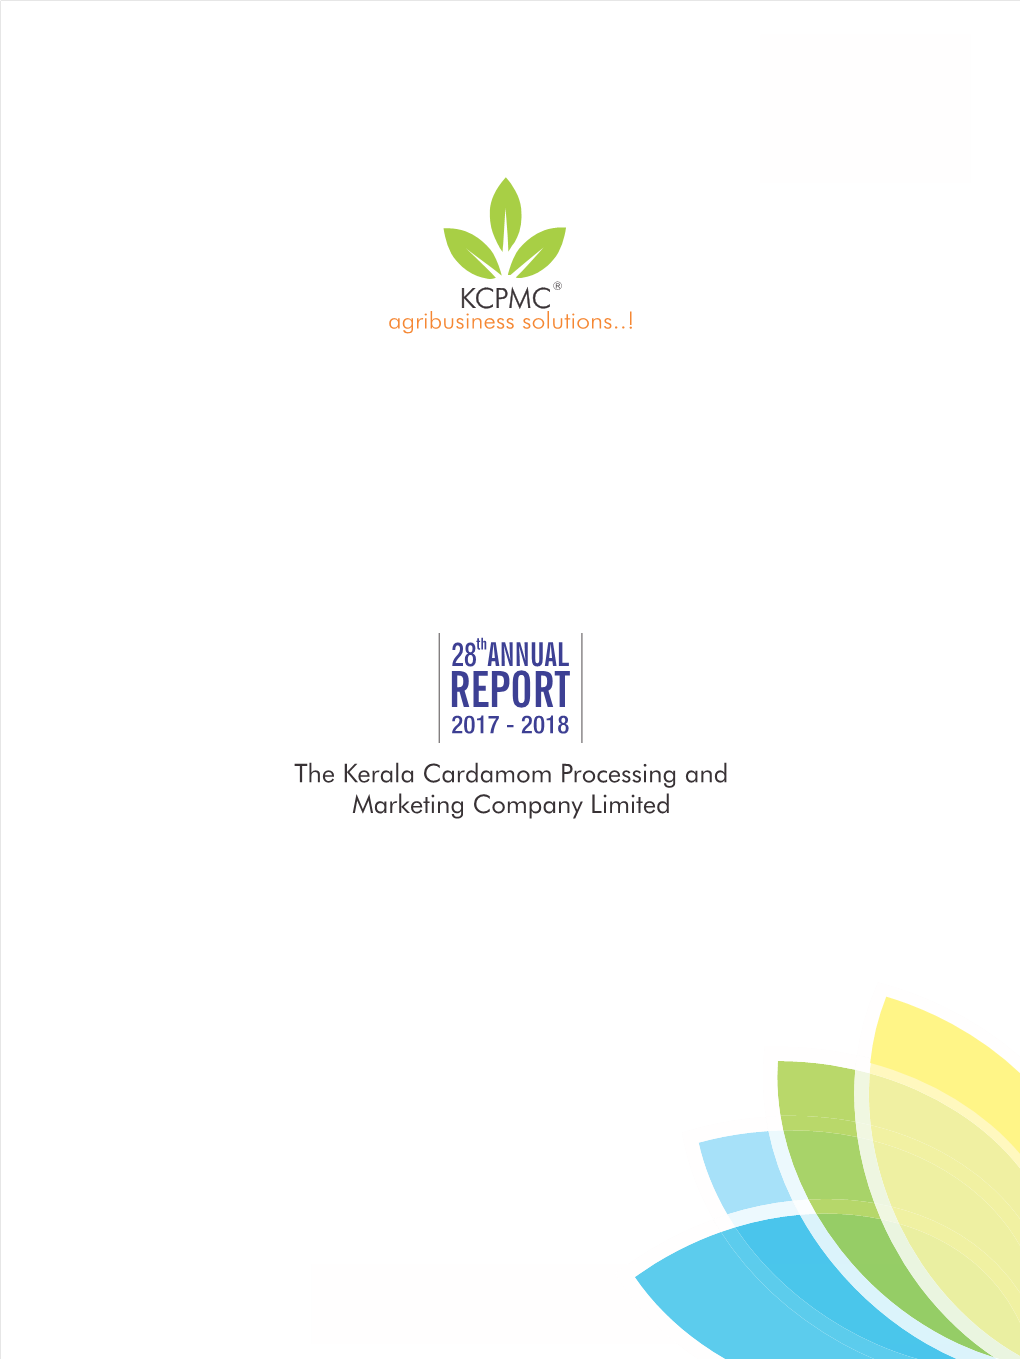 The Kerala Cardamom Processing and Marketing Company Limited